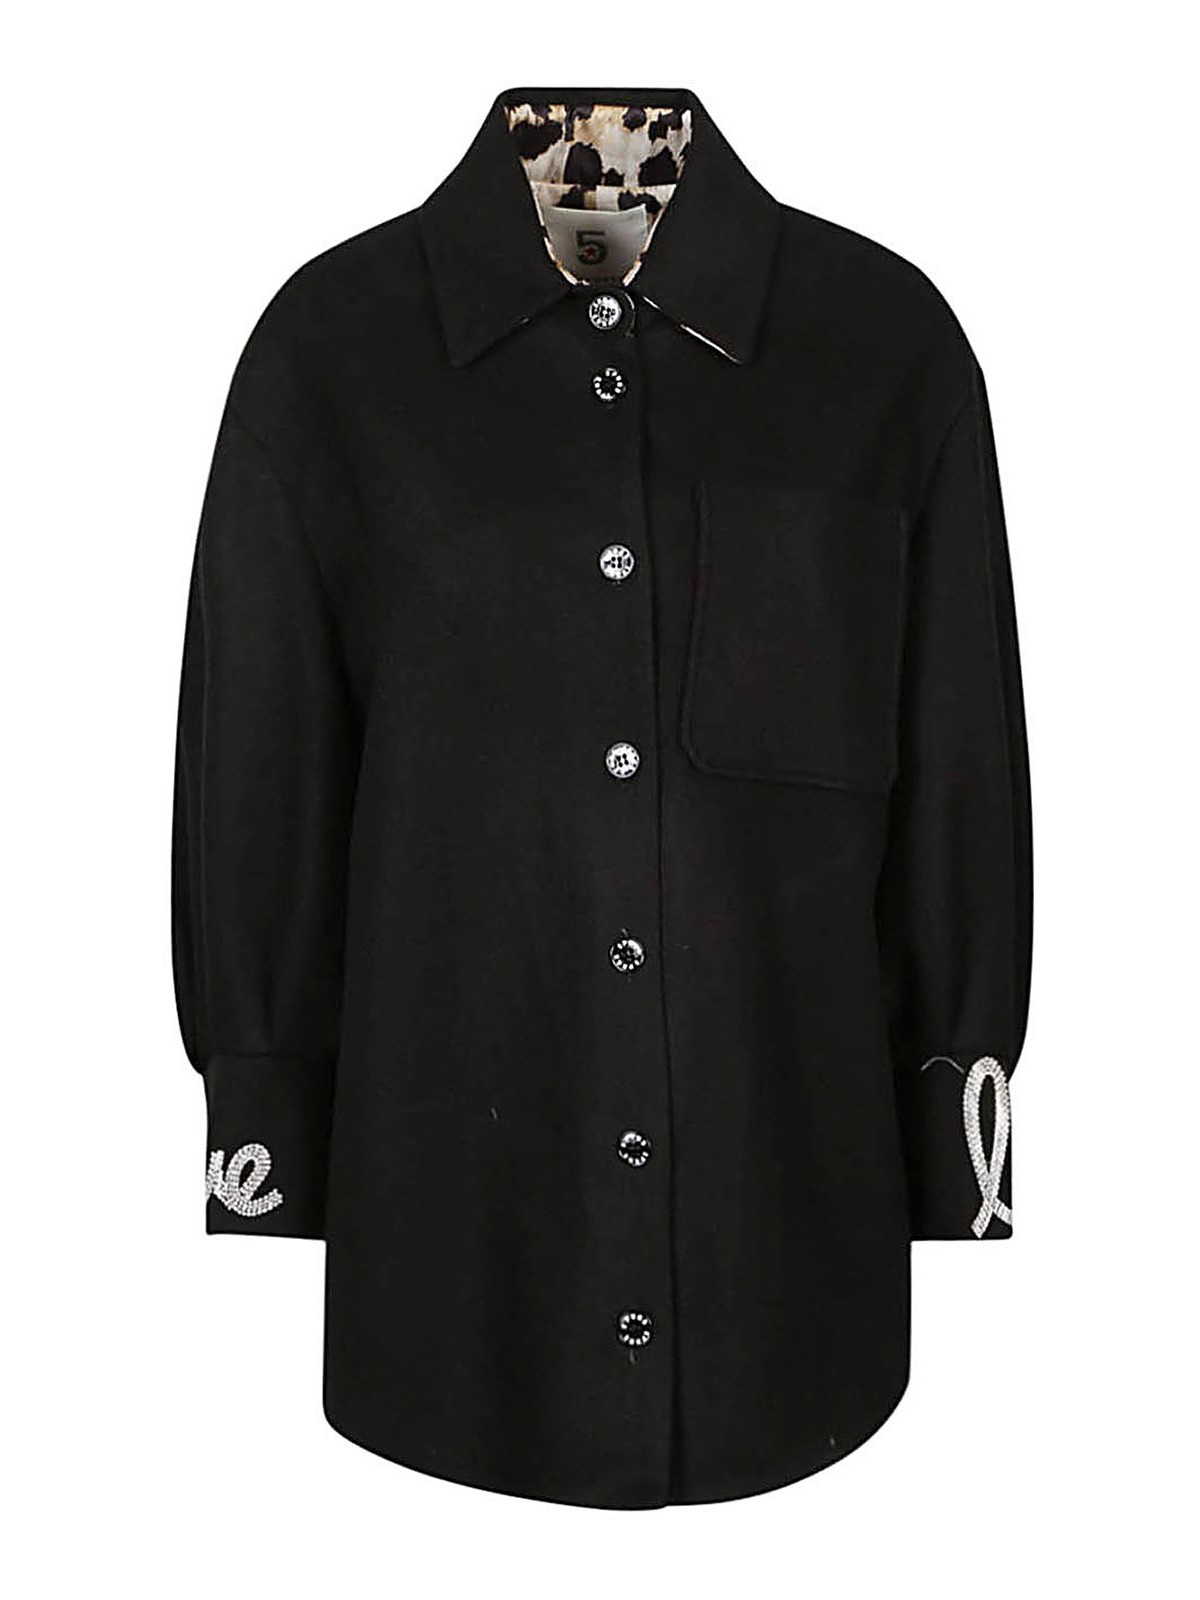 5*progress Embroidered Wool Blend Coat In Black